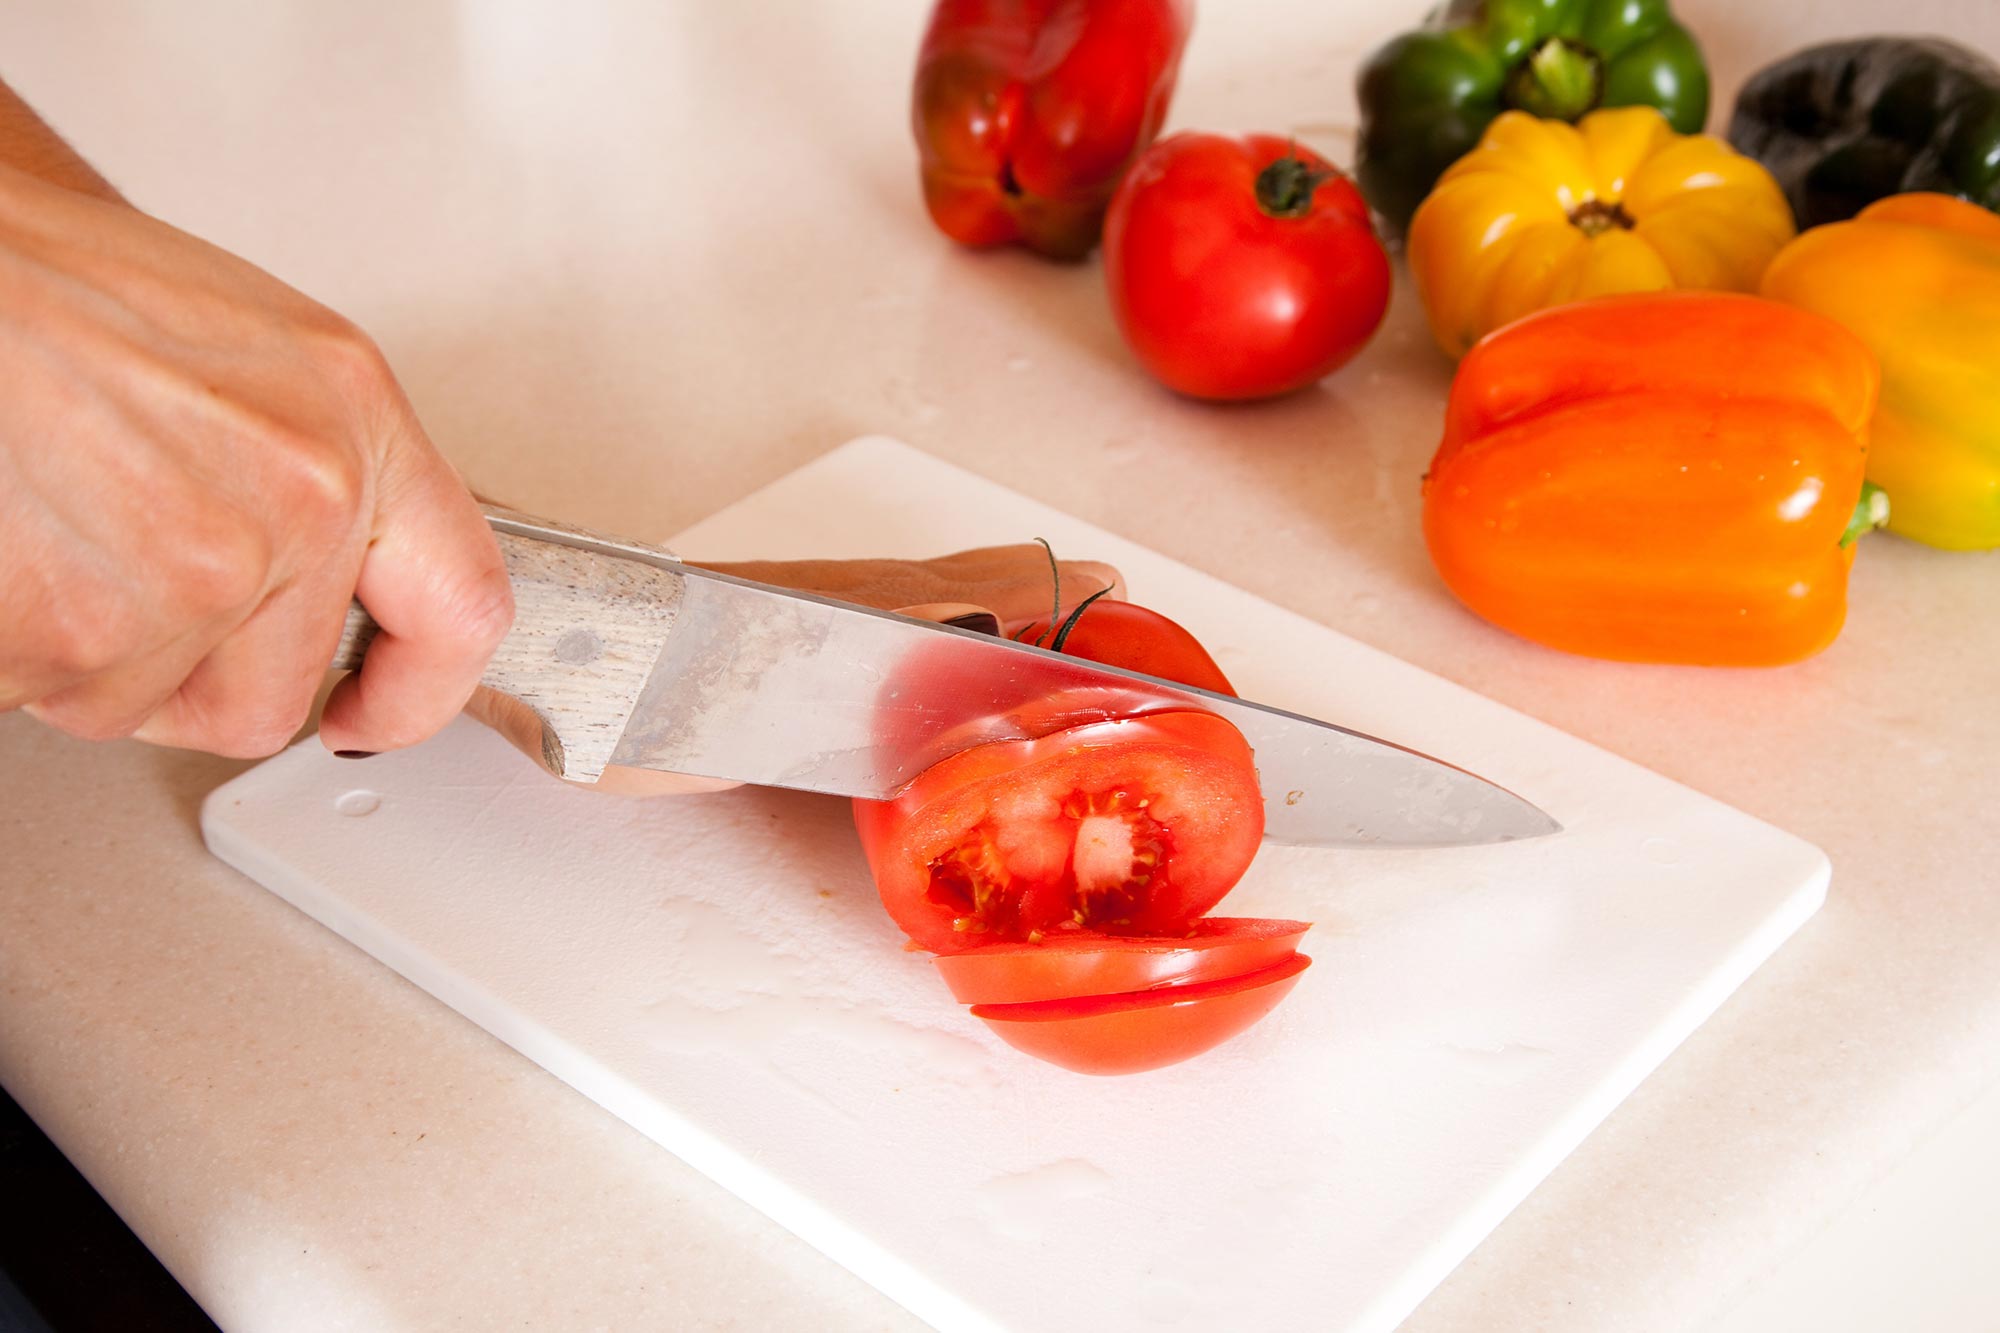 Cutting Boards Leach Microplastics into Food: Study